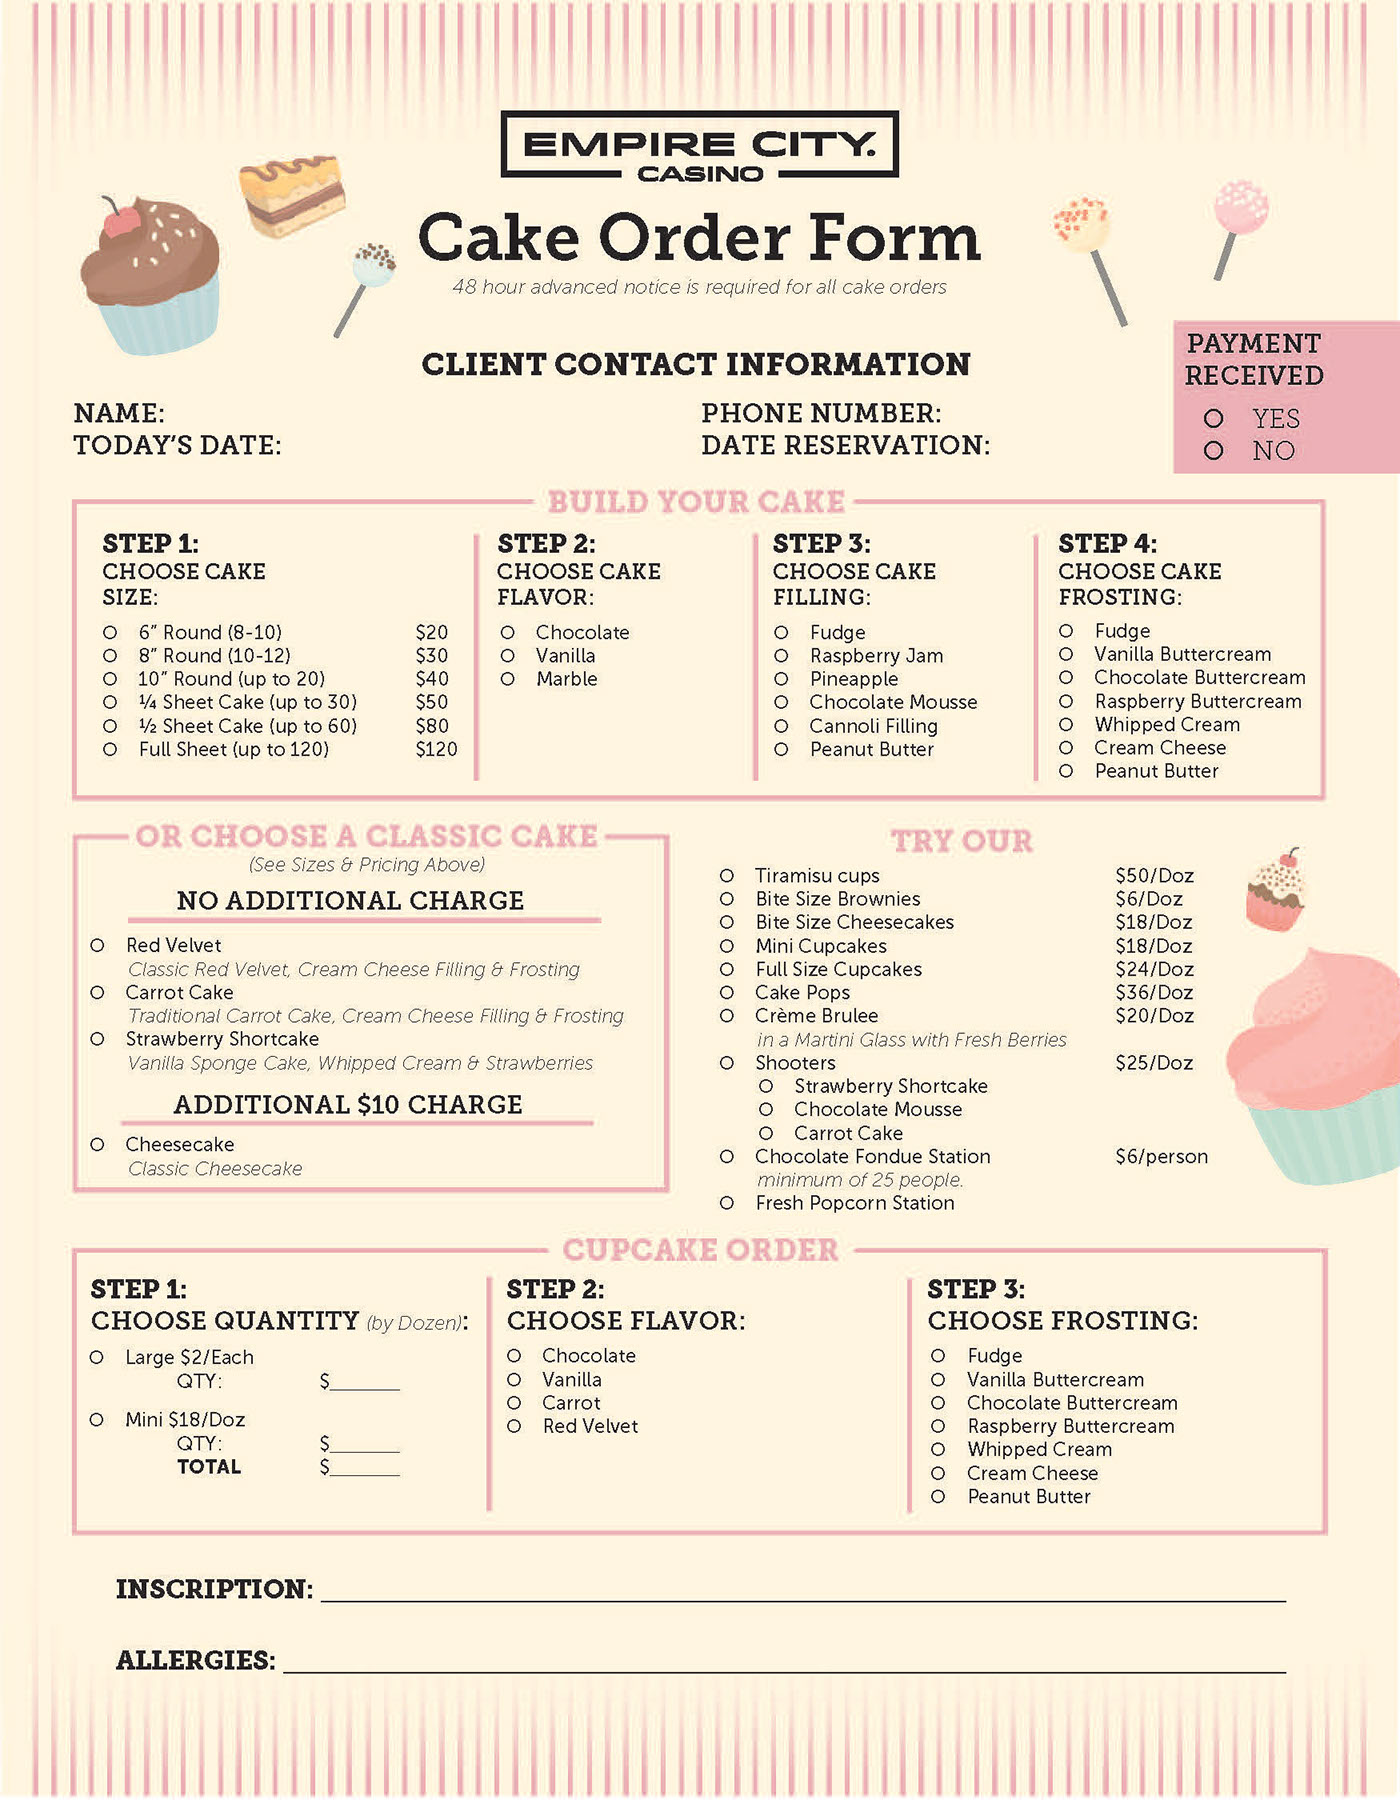 Cake Order Form on Behance